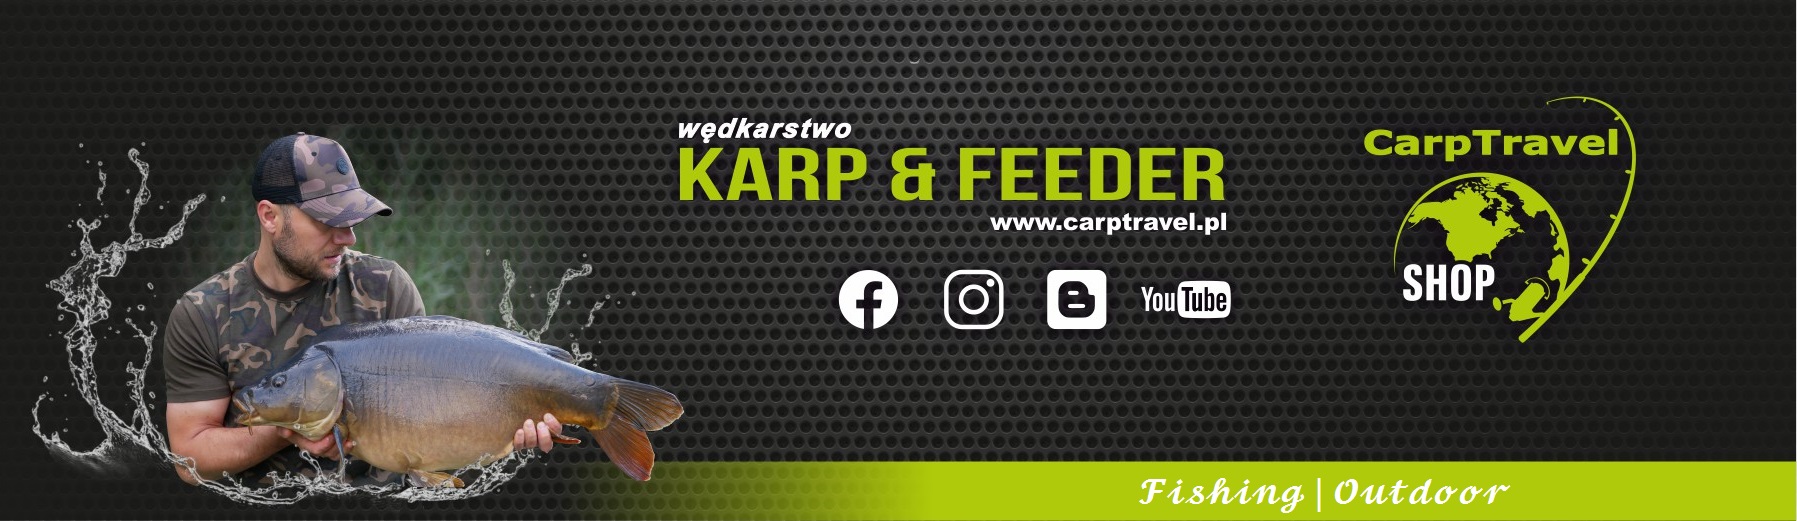 CarpTravel - Karp & Feeder | Fishing Outdoor